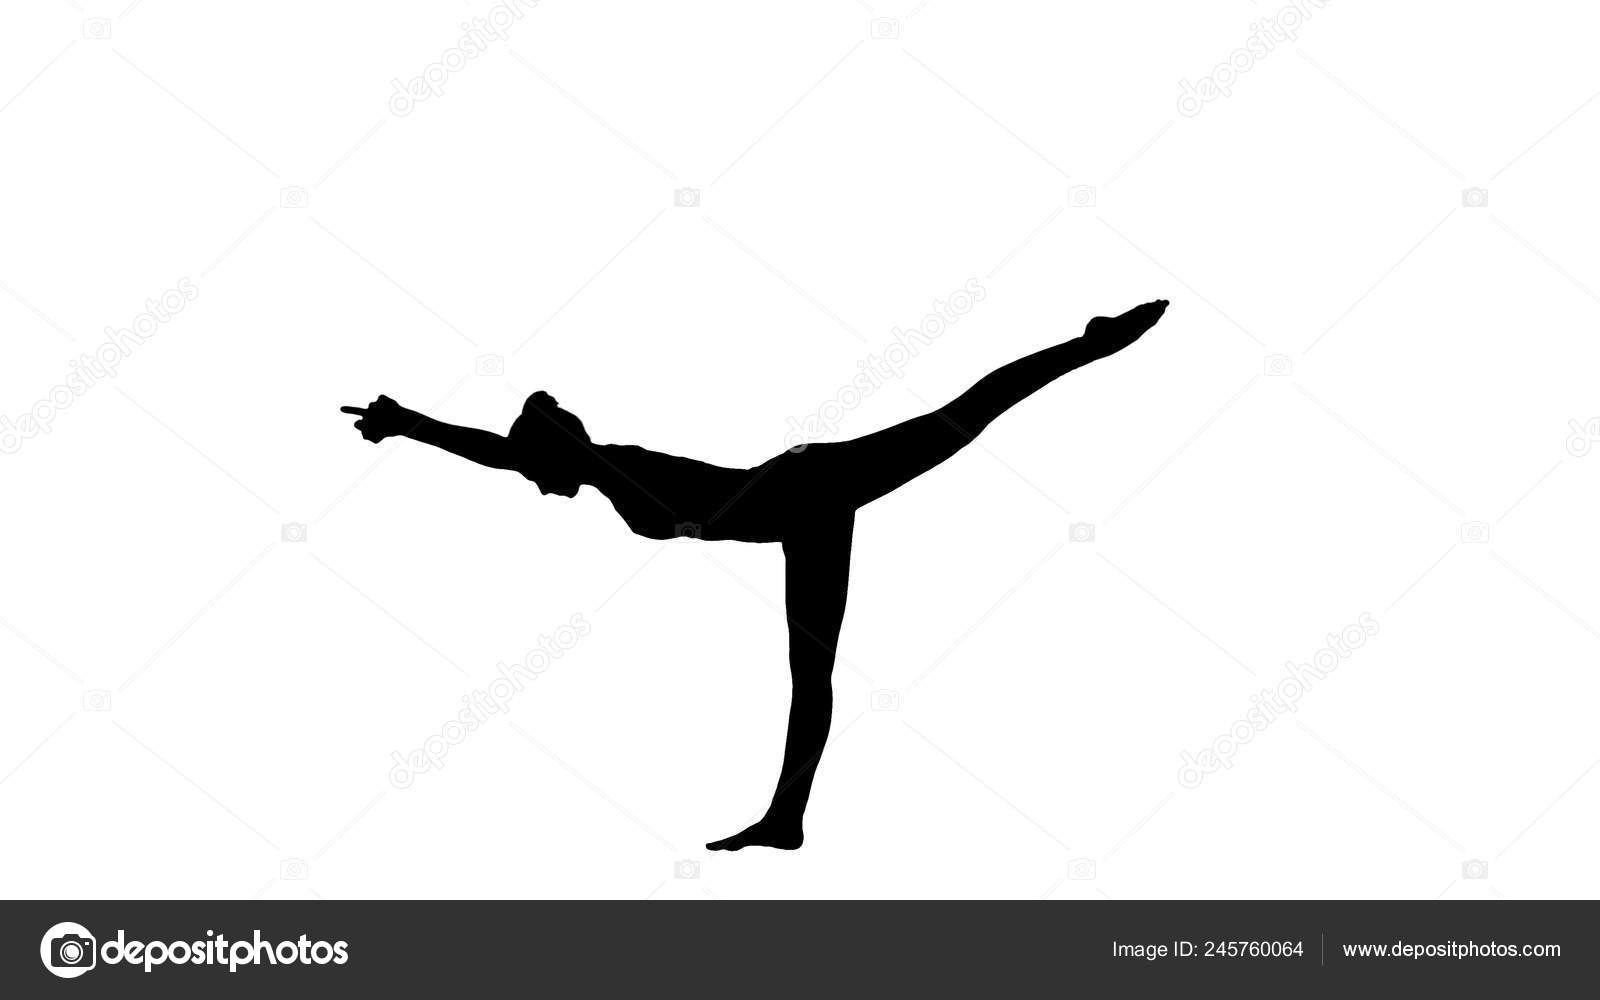 Tuladandasana or Balancing Stick Pose is an advanced yoga, People Stock  Footage ft. asana & balance - Envato Elements